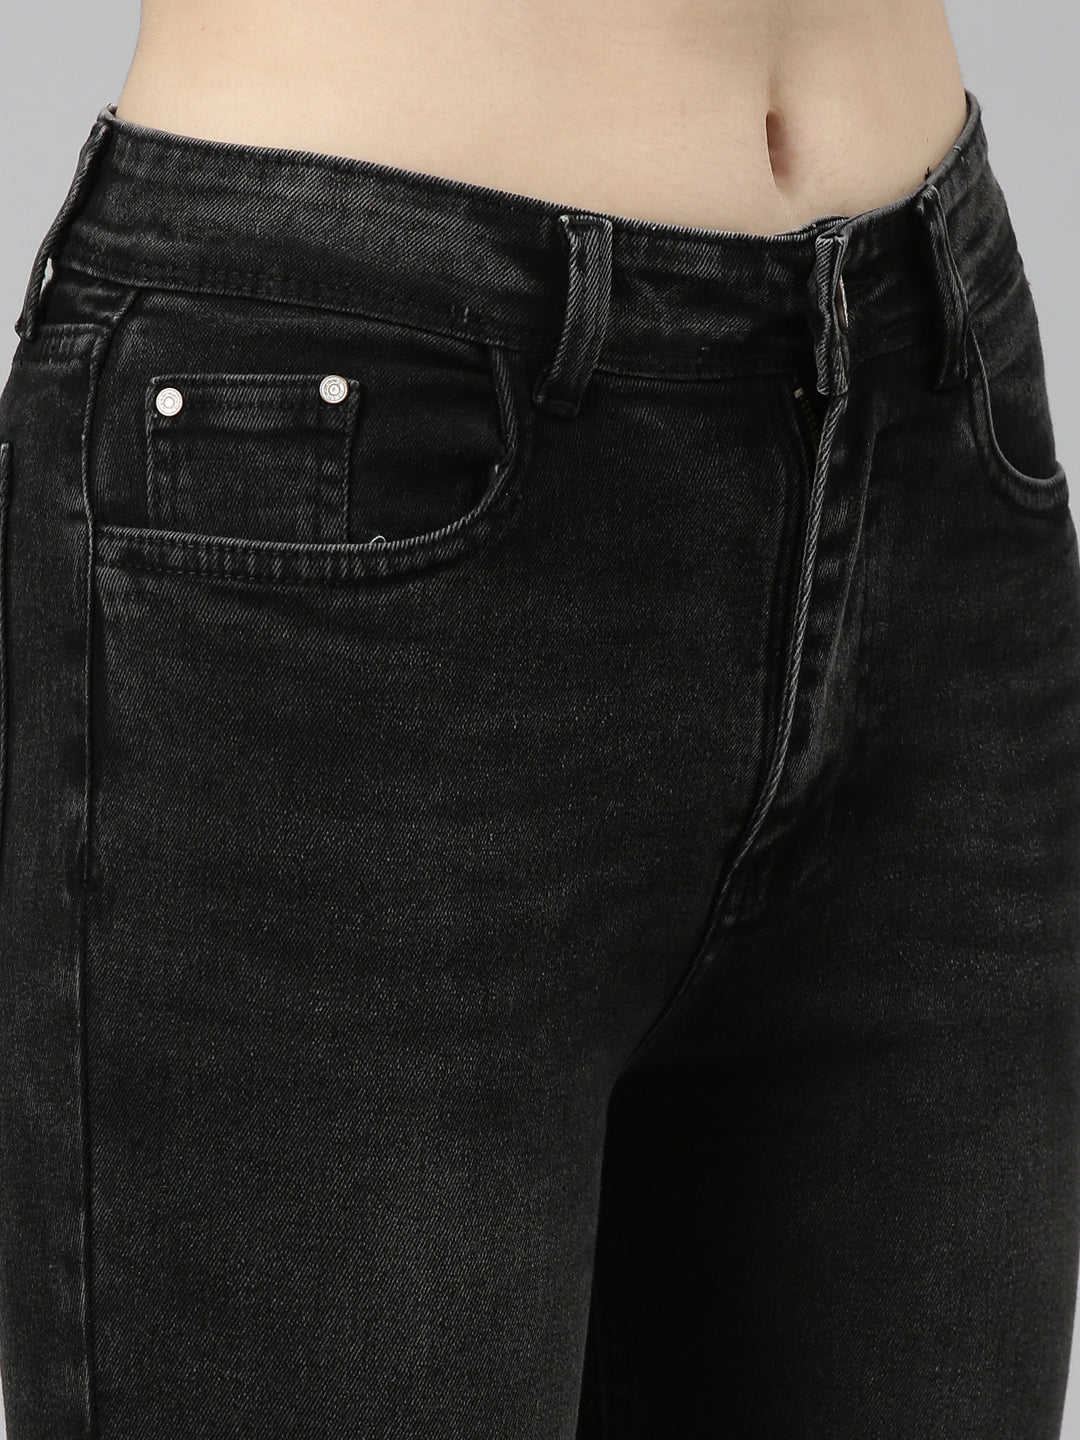 Women Grey Solid Bootcut Denim Jeans